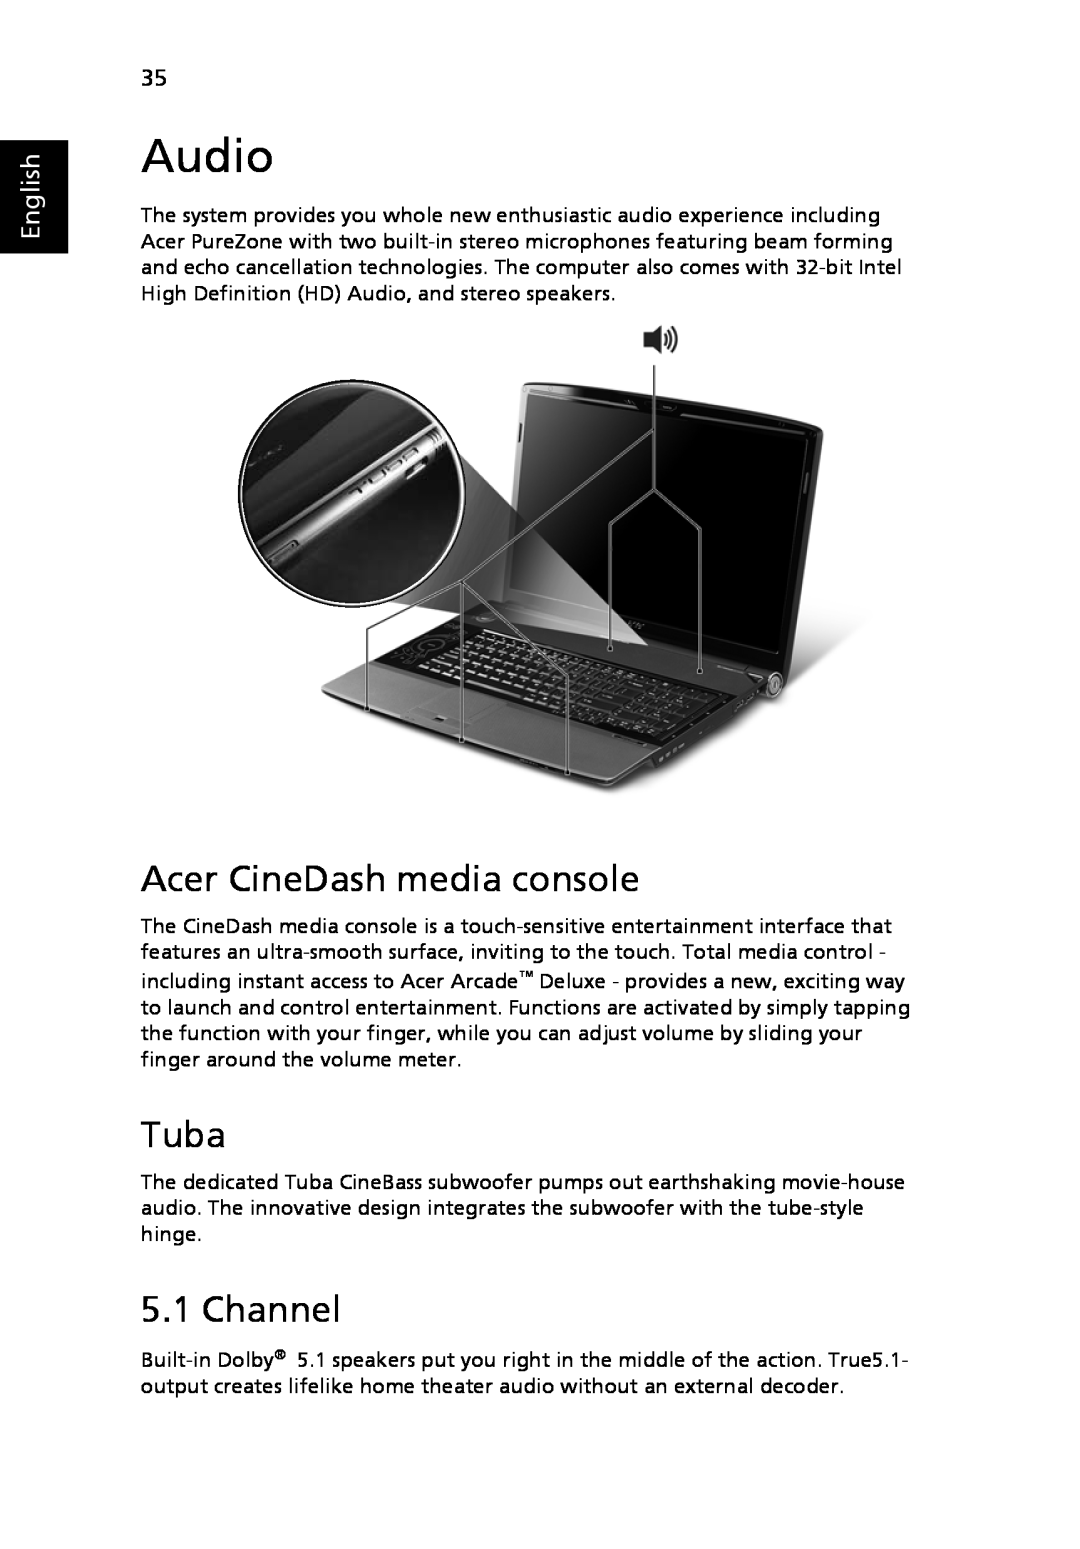 Acer 8920 Series, LE1 manual Audio, Acer CineDash media console, Tuba, Channel, English 